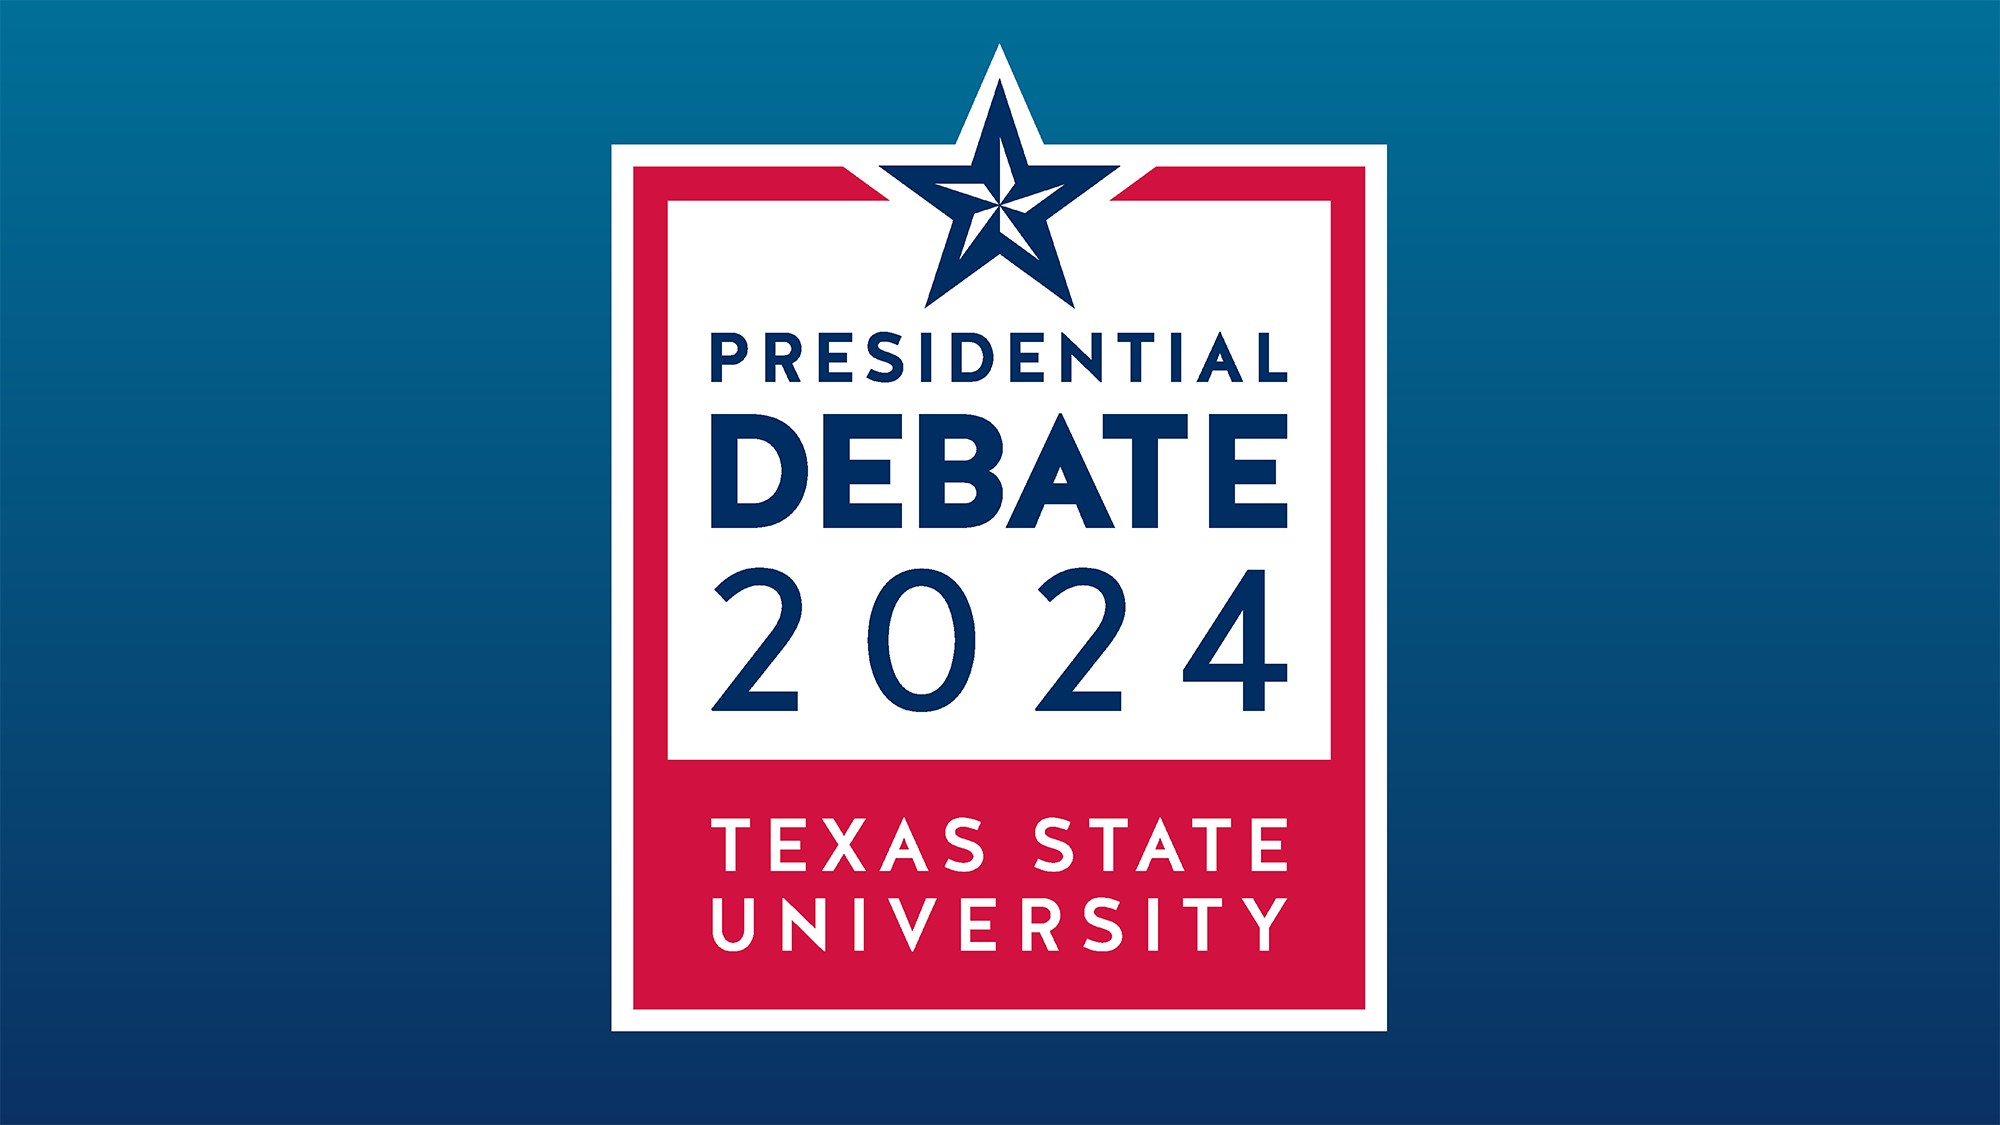 Texas State University selected to host 2024 Presidential Debate